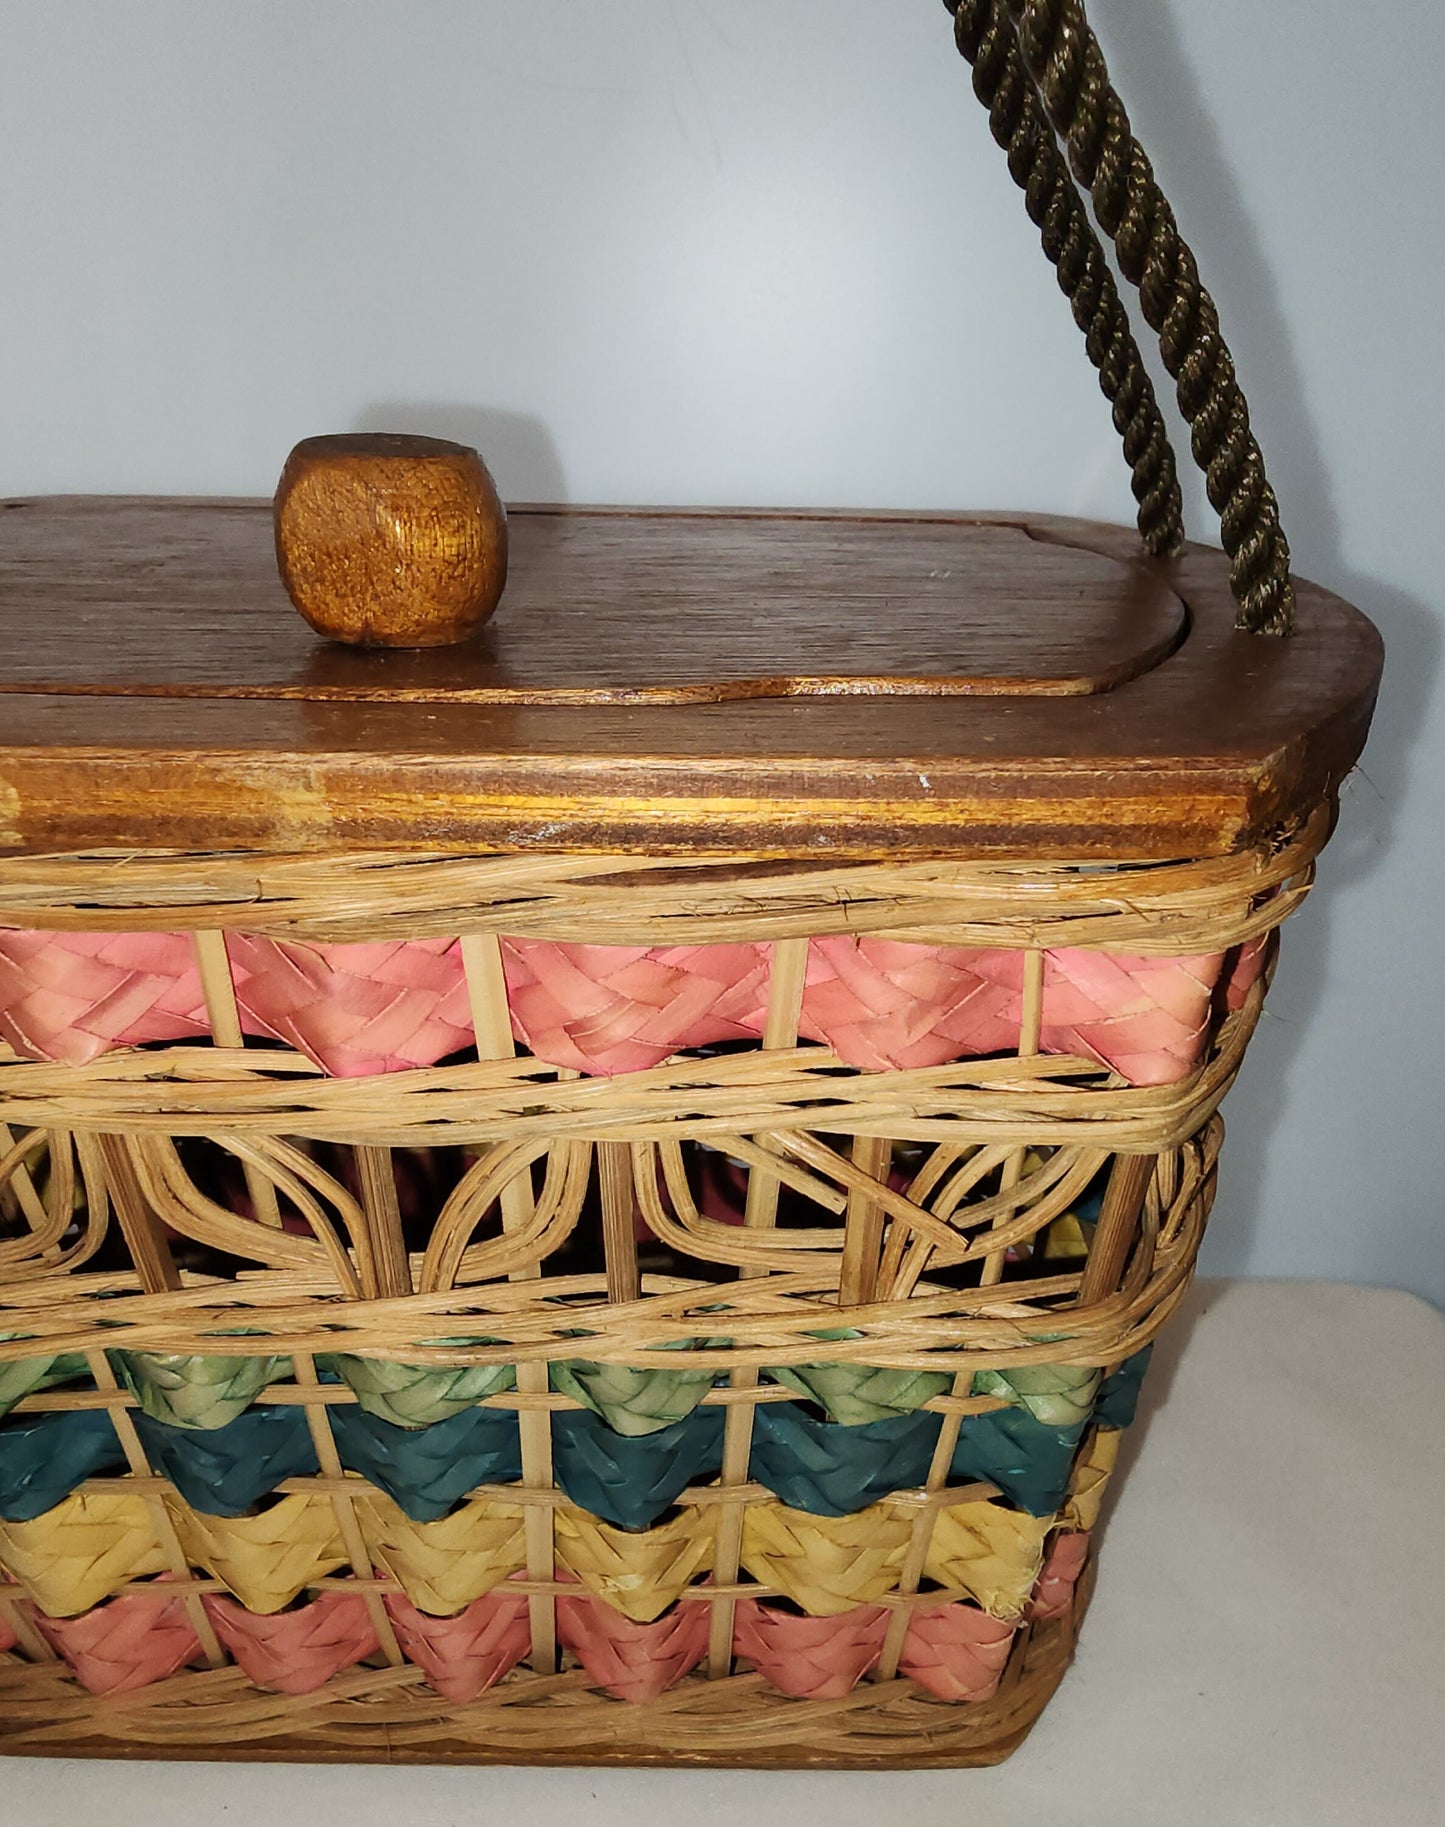 Vintage Basket Purse 1950s Colorful Woven Straw Rattan Basket Purse Wood Lid Mid Century Rockabilly